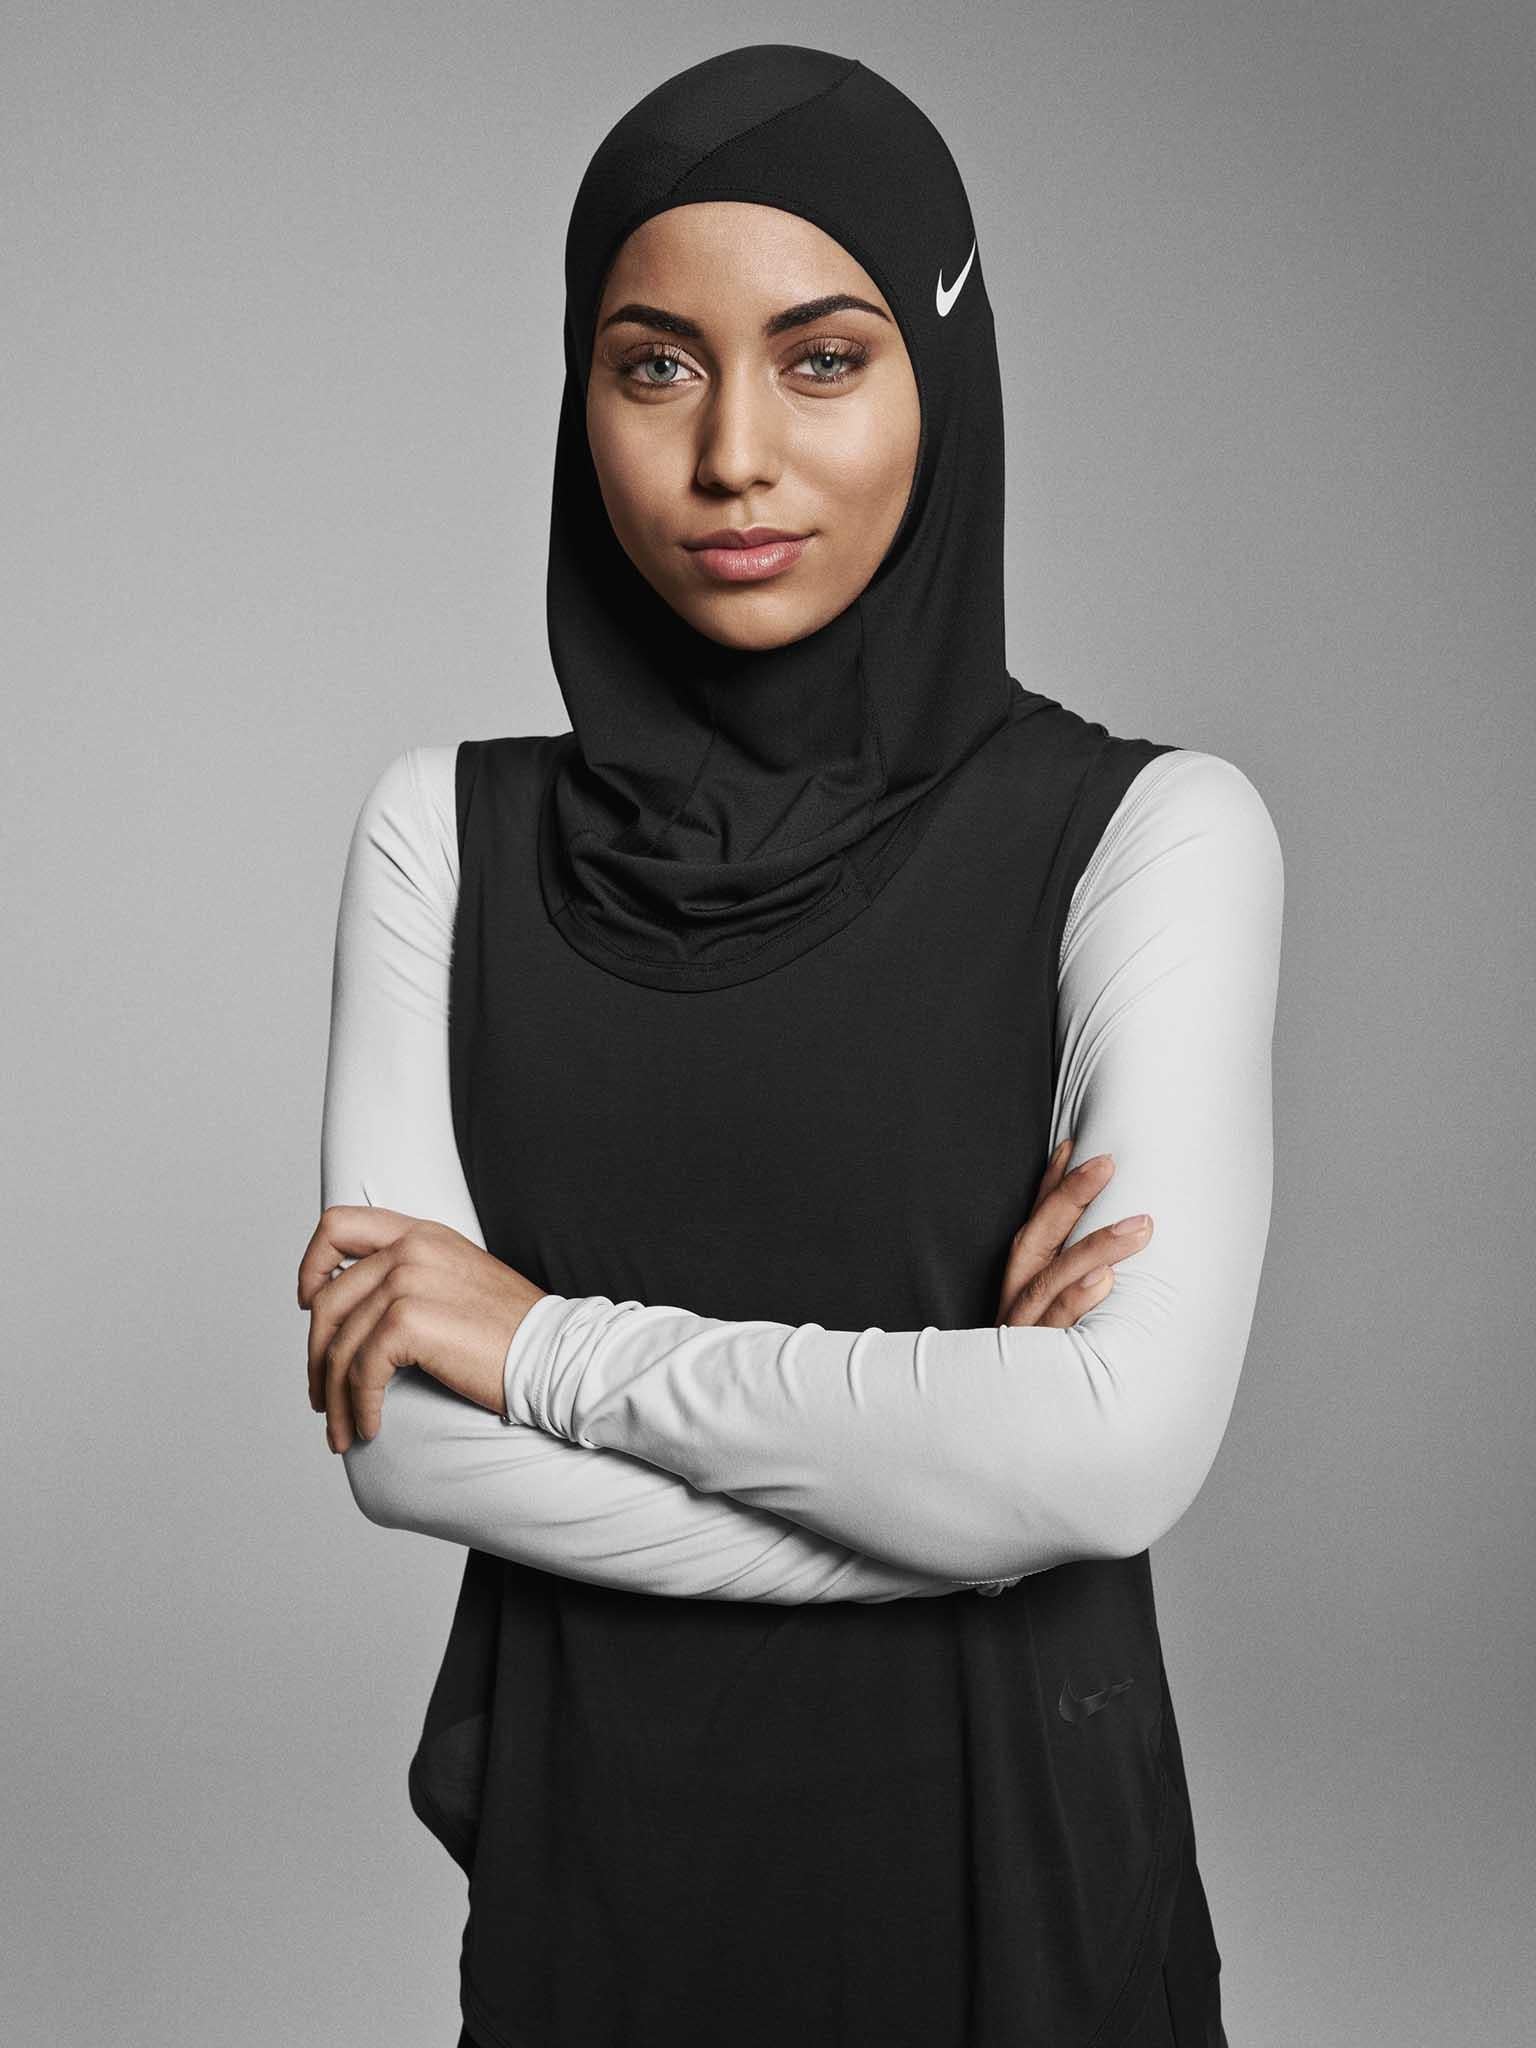 Nike Hijab Faces Backlash on Social Media